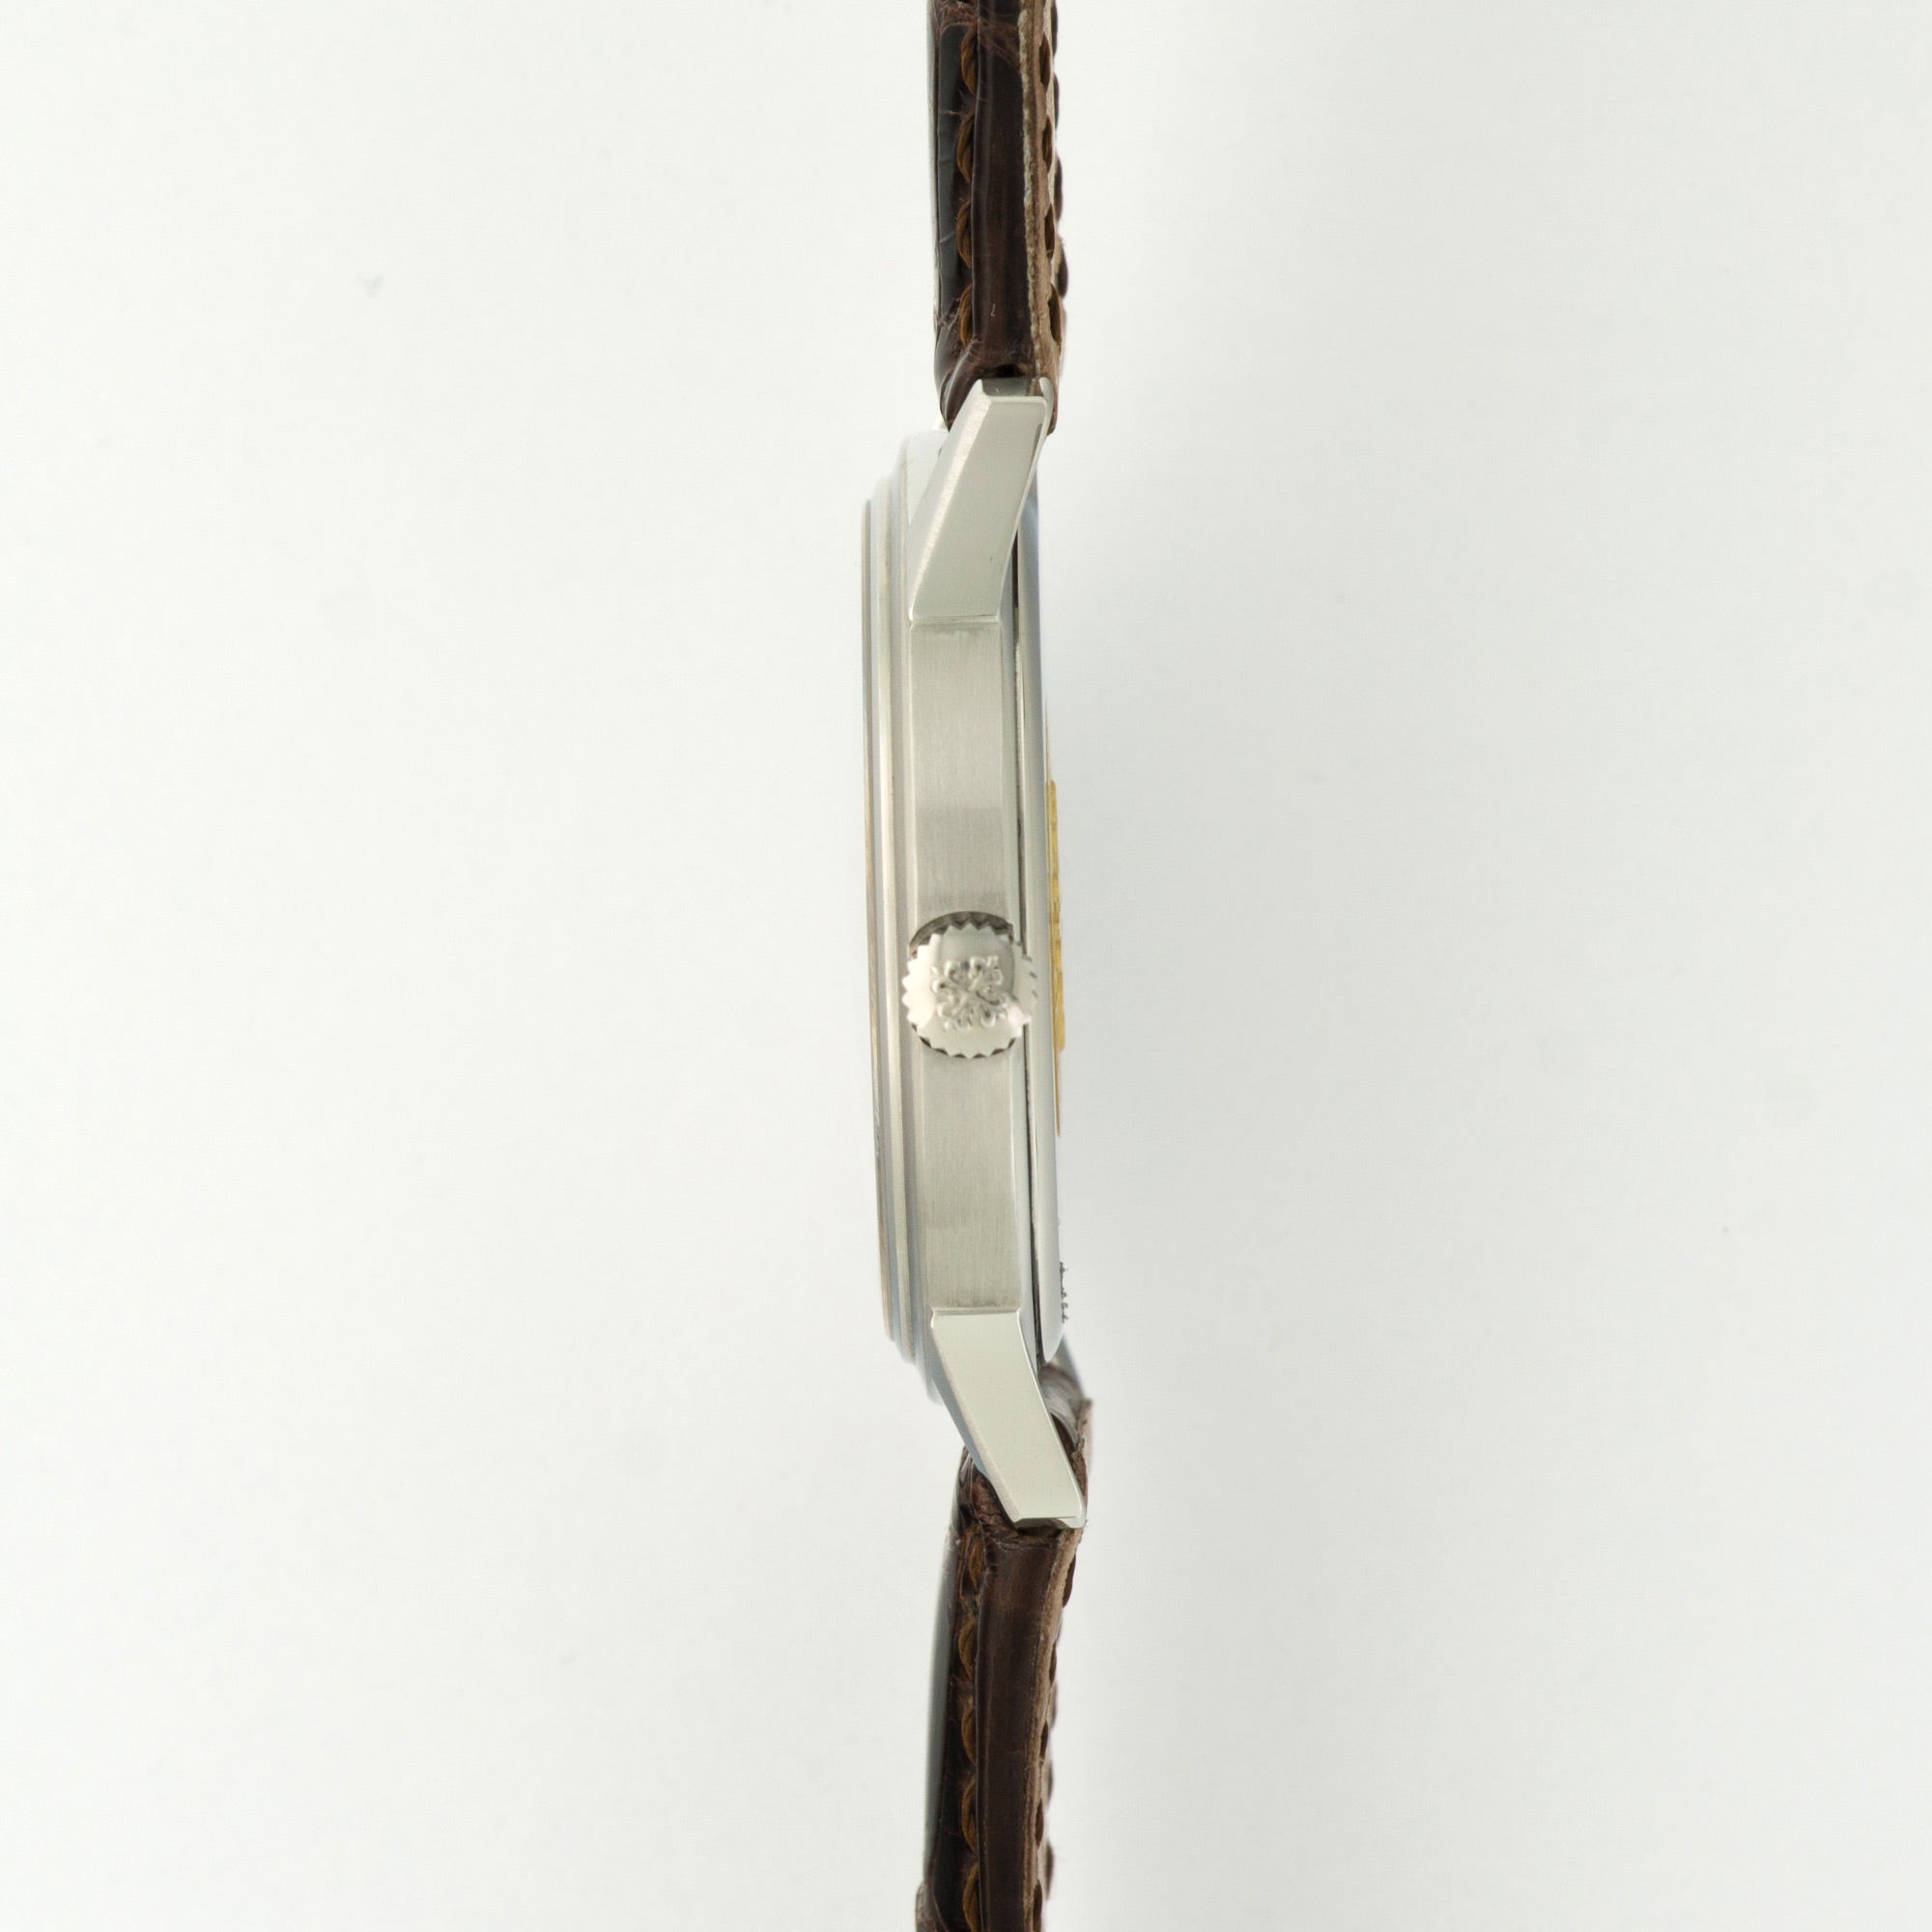 Patek Philippe - Patek Philippe Stainless Steel 150th Anniversary Watch Ref. 3718 - The Keystone Watches